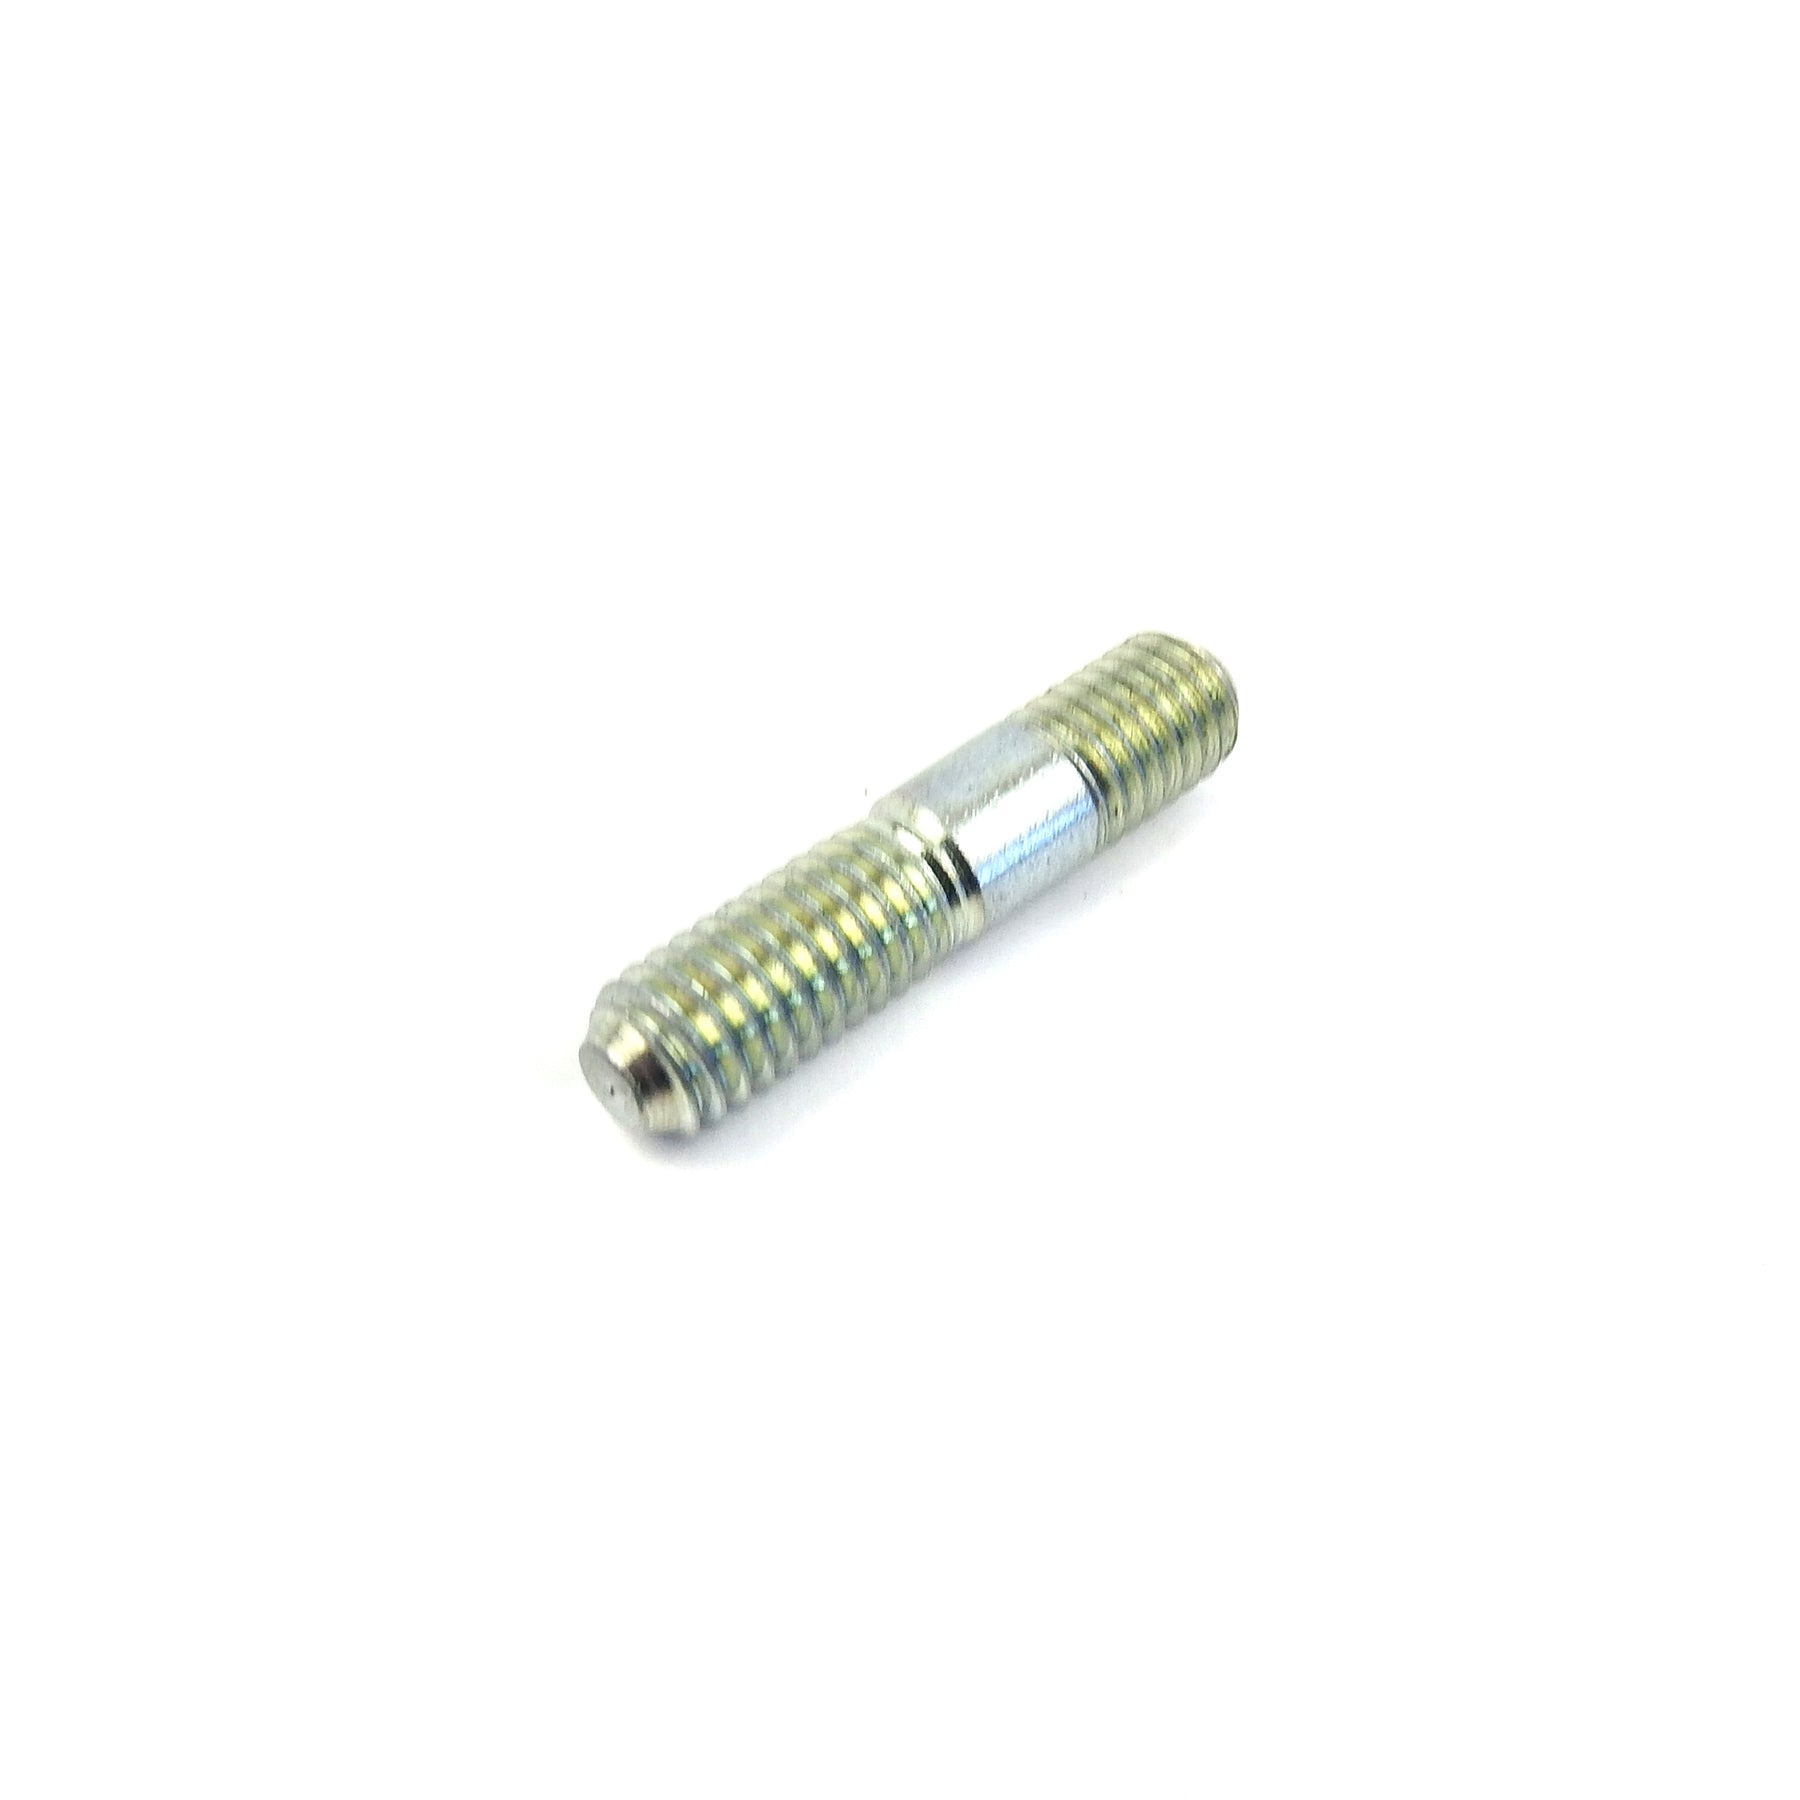 Fastener Repair Stud 6mm to 7mm 35mm Long Zinc Plated